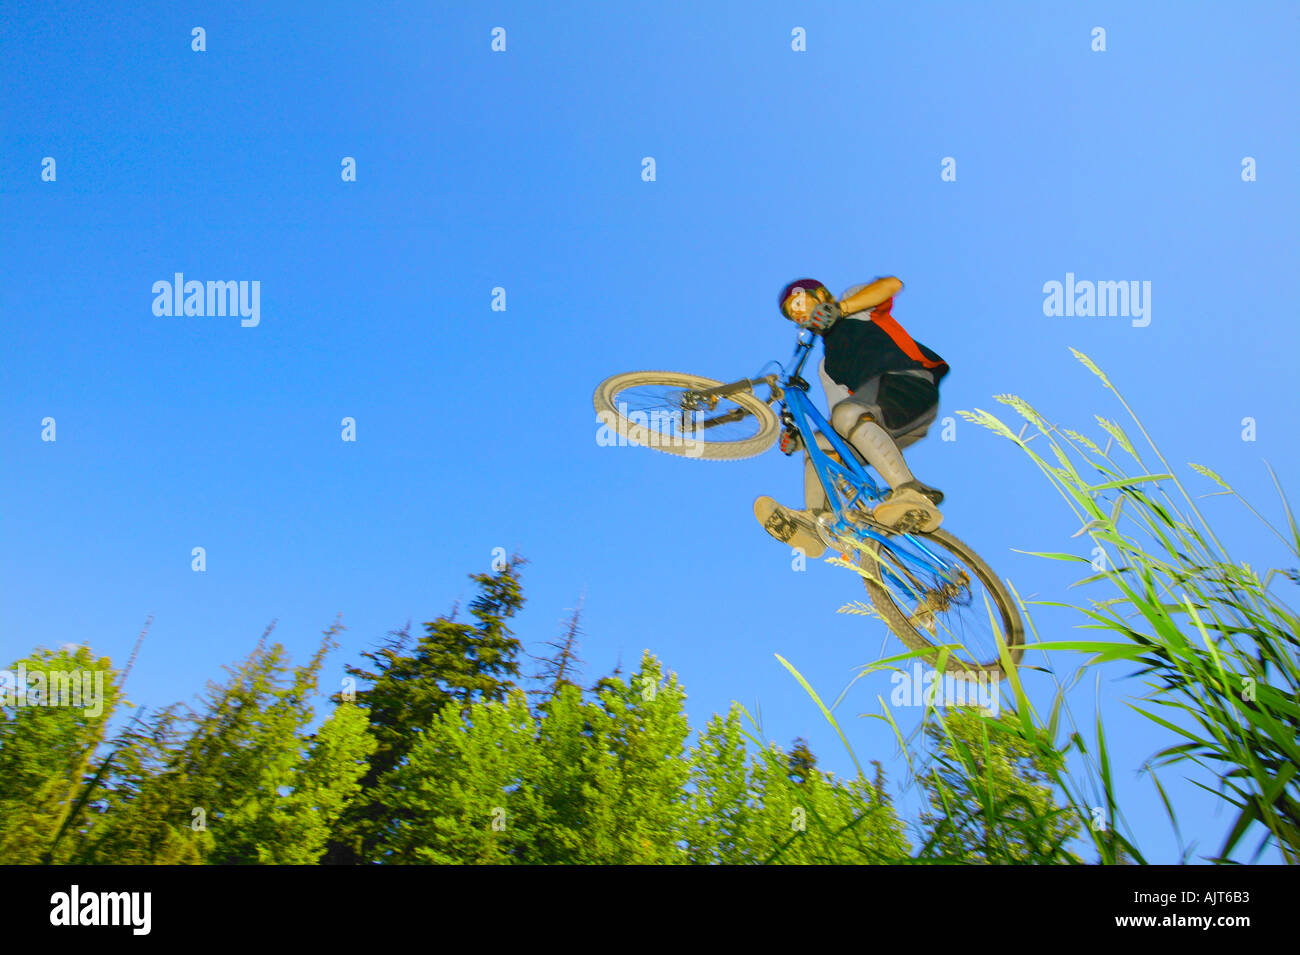 Mountain biker in air against blue sky Stock Photo